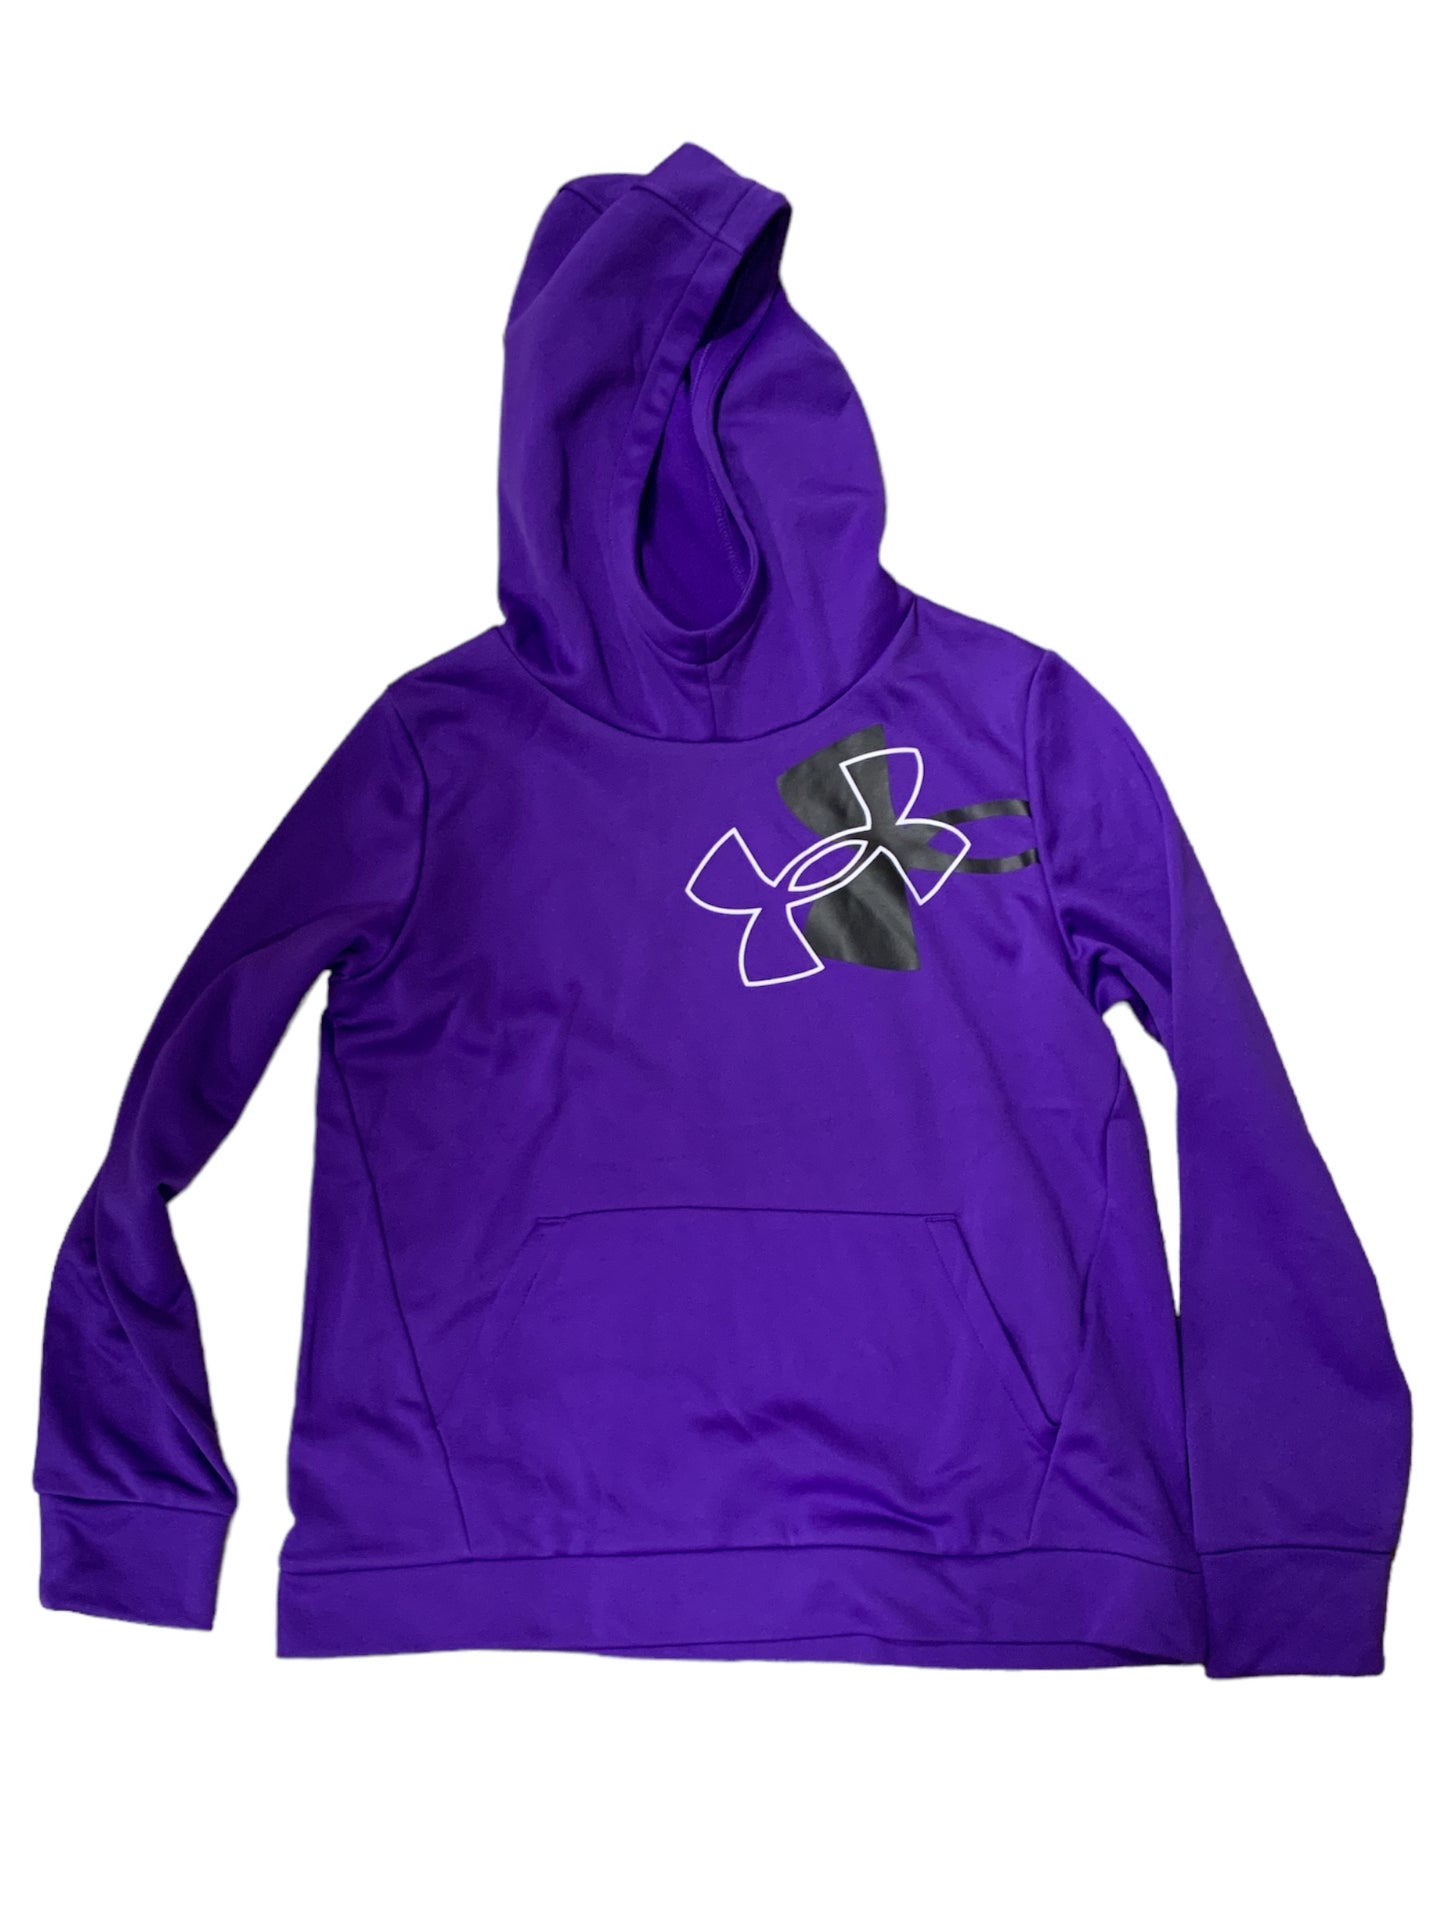 Vibrant Purple Sweater Size youth medium